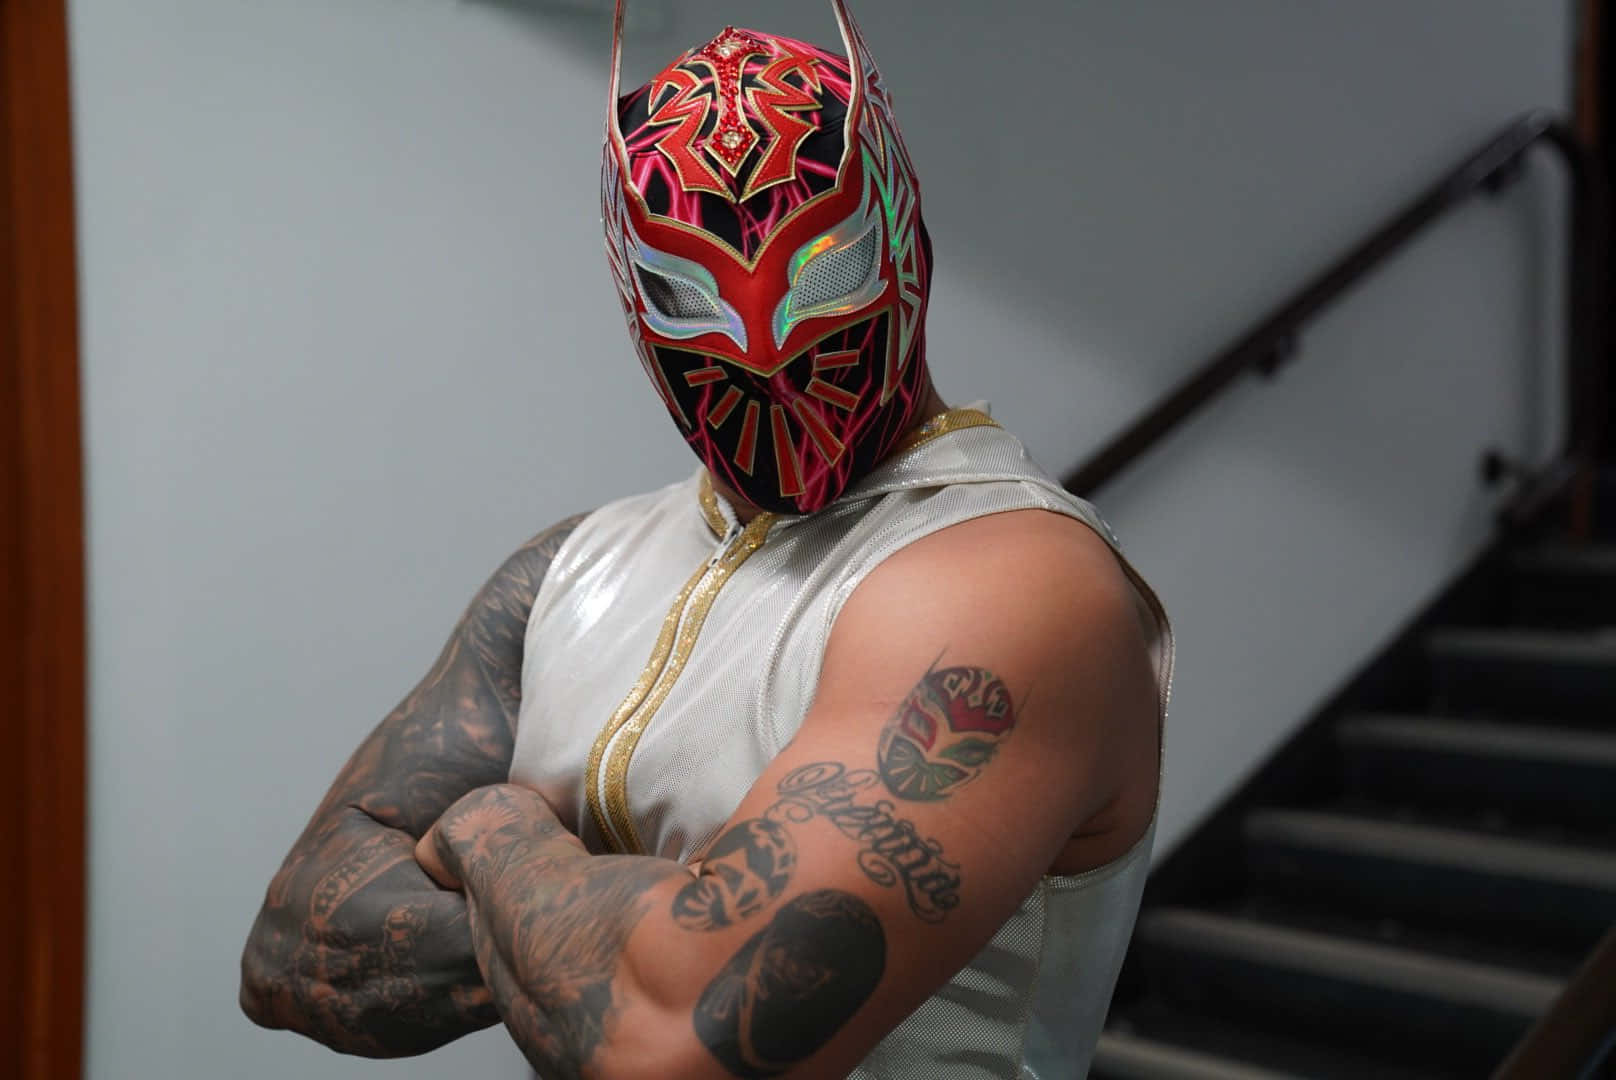 Wwe American Wrestler Sin Cara In Red Mask Wallpaper